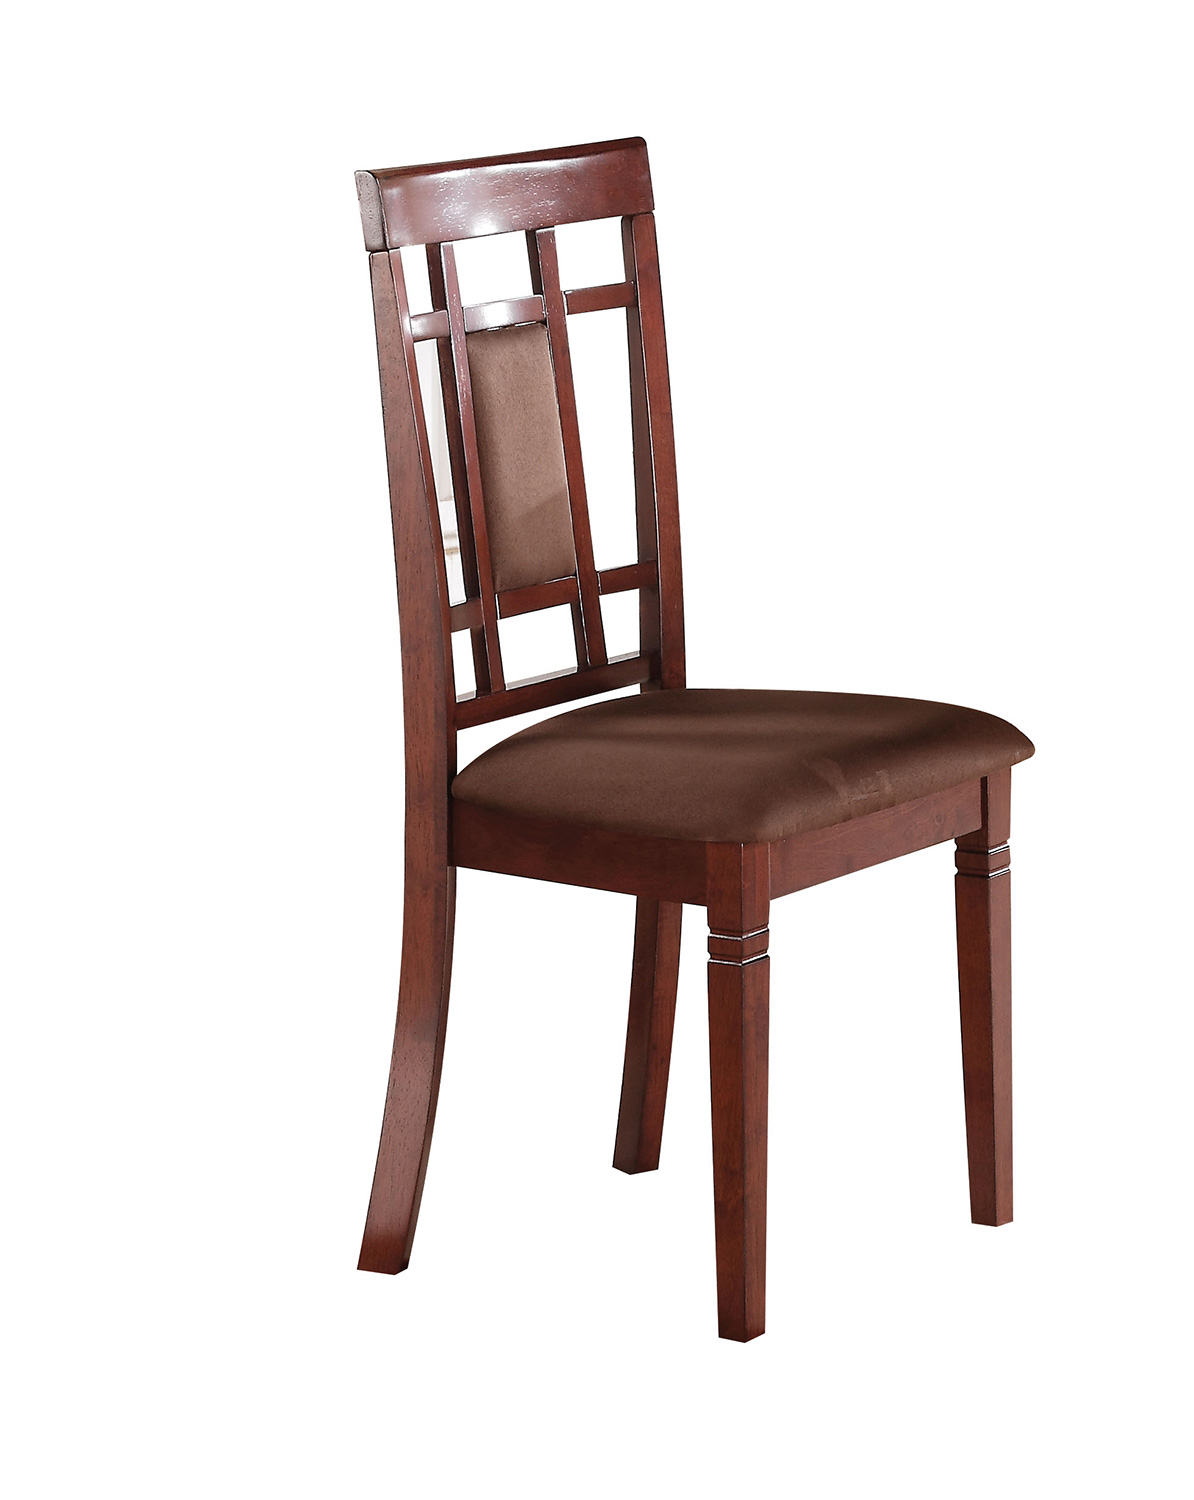 Acme Sonata Side Chair - Cherry/Chocolate Mfb